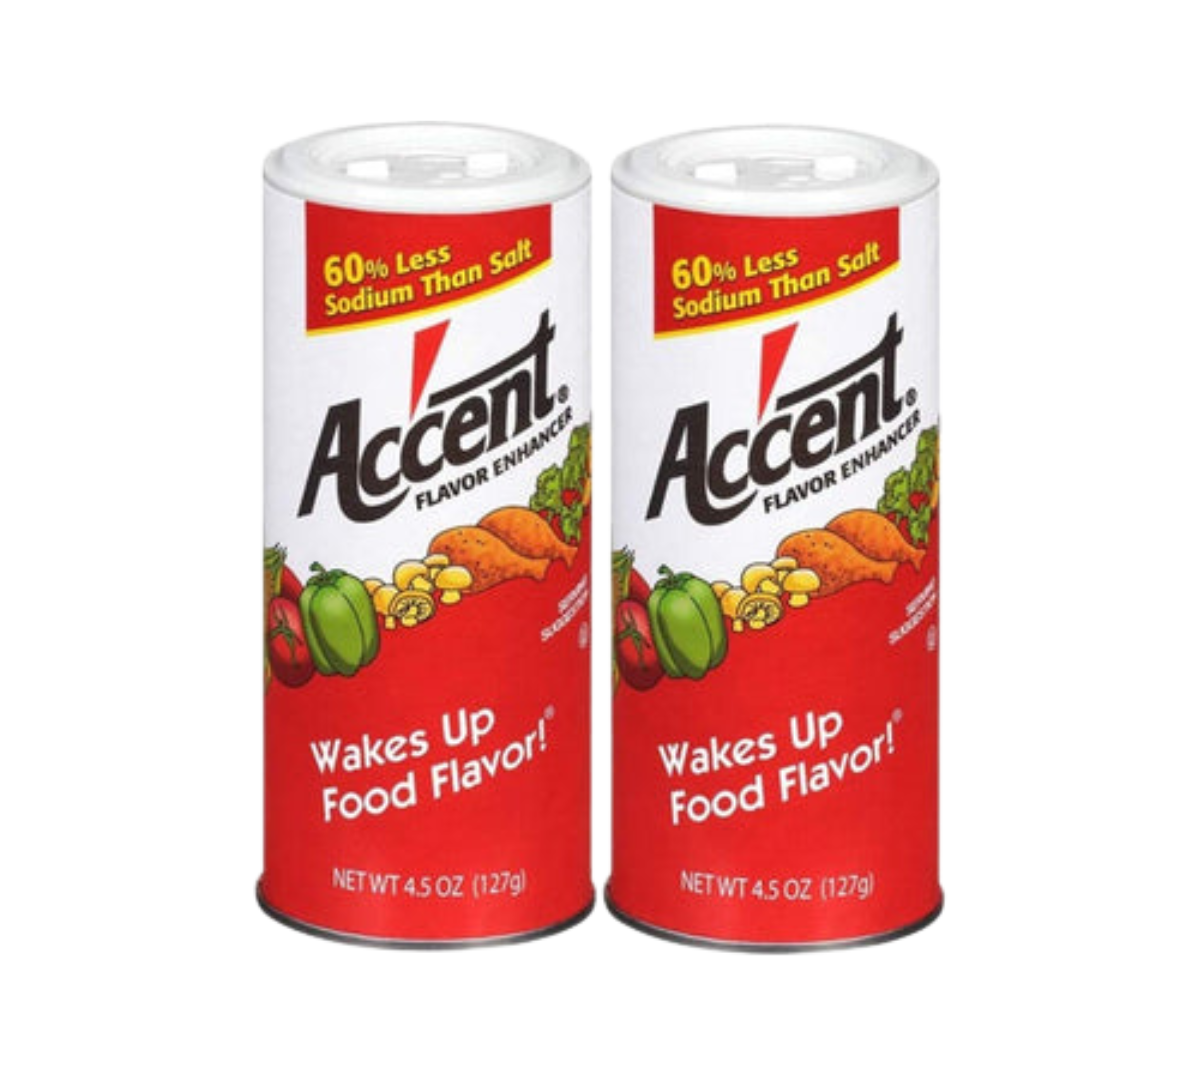 Accent Flavor Enhancer, 4.5 oz